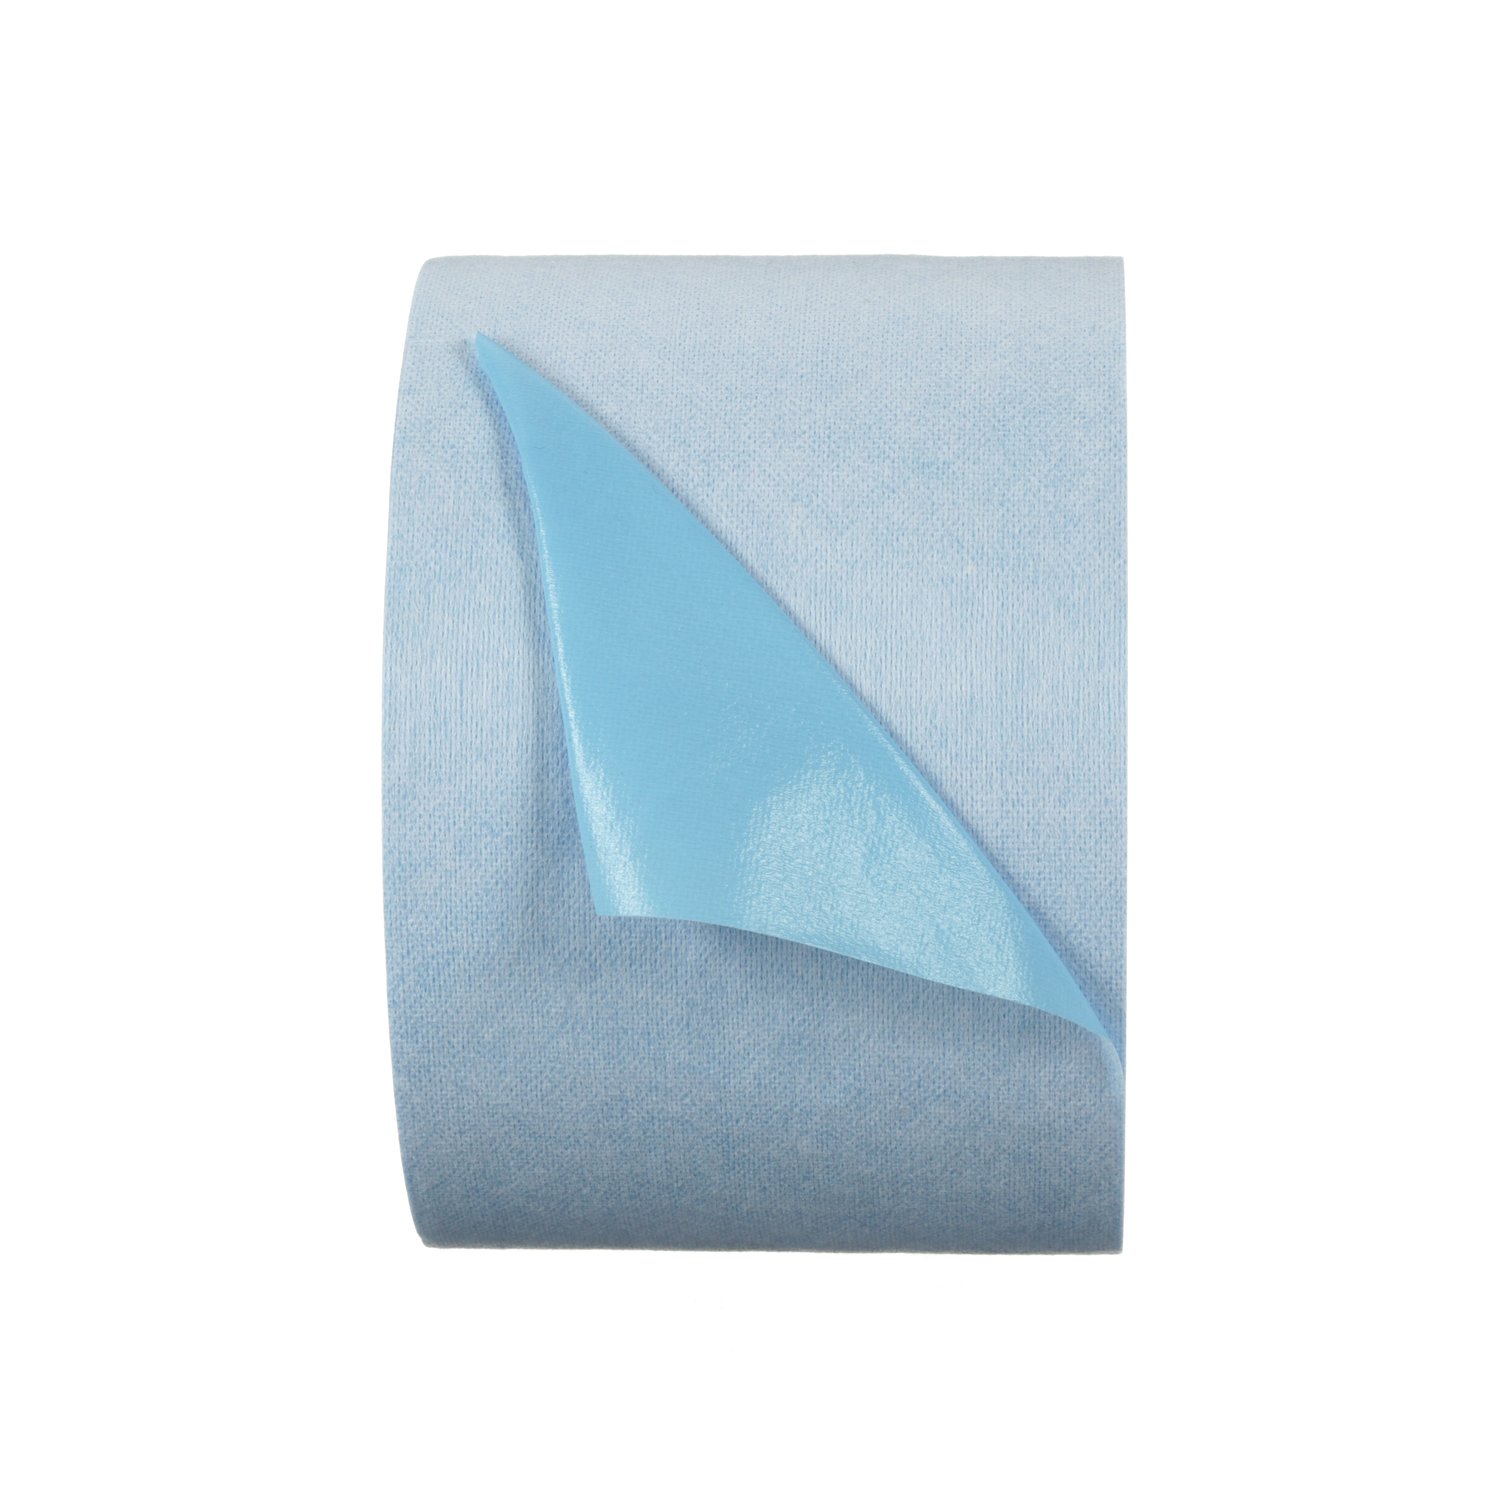 7100169347 - 3M Self-Stick Liquid Protection Fabric, 36877, Blue, 6 in x 300 ft per
roll, 4 roll pack, 1 pack per case